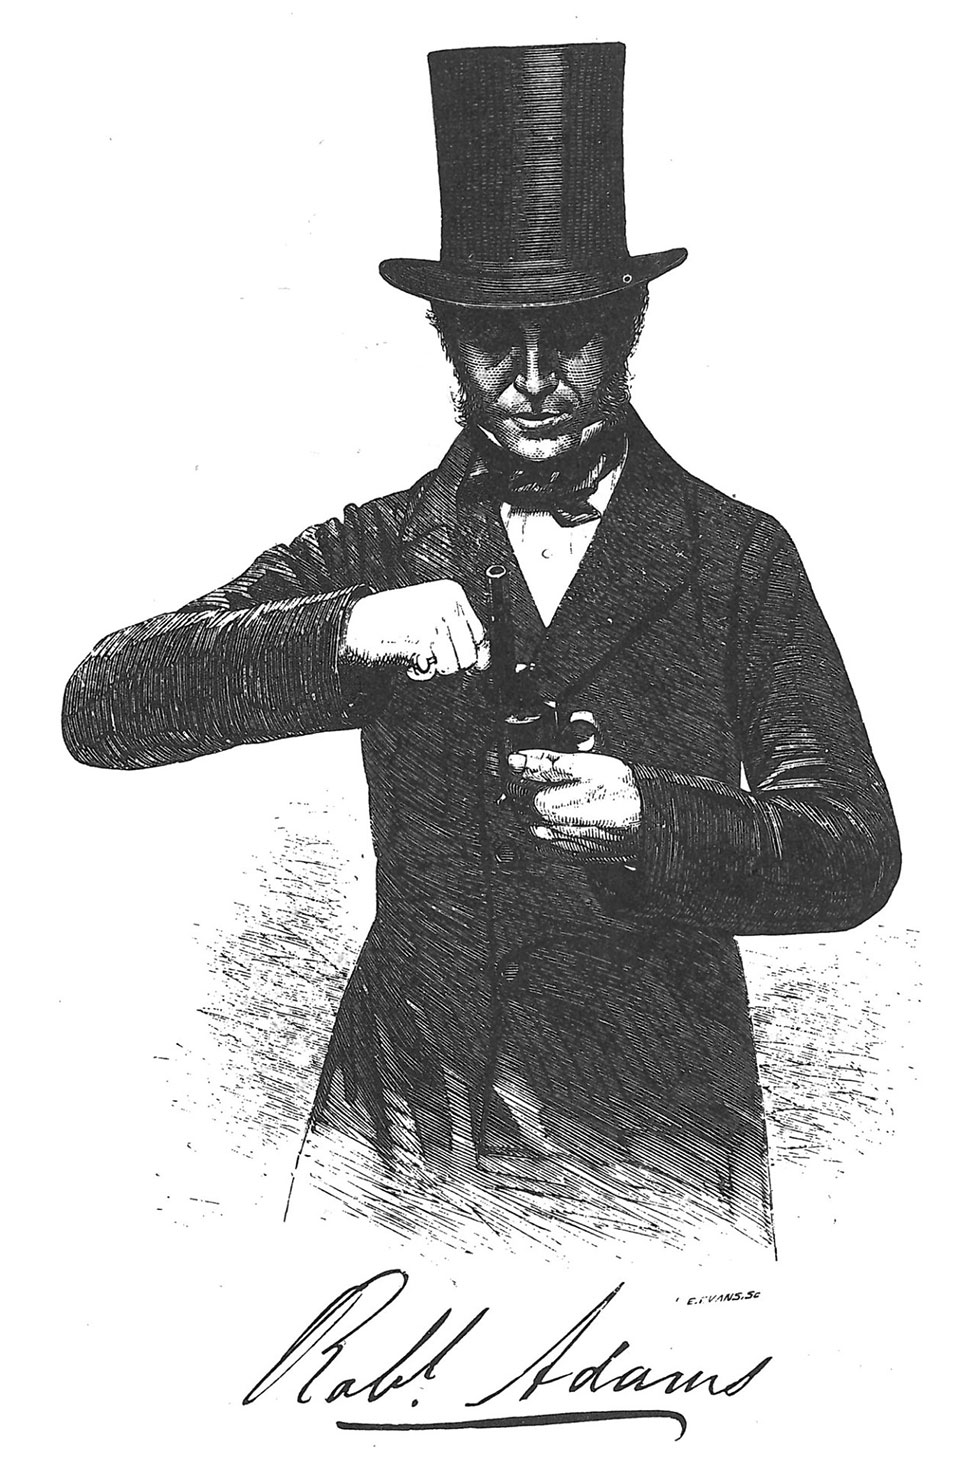 Robert Adams with his patent revolver.